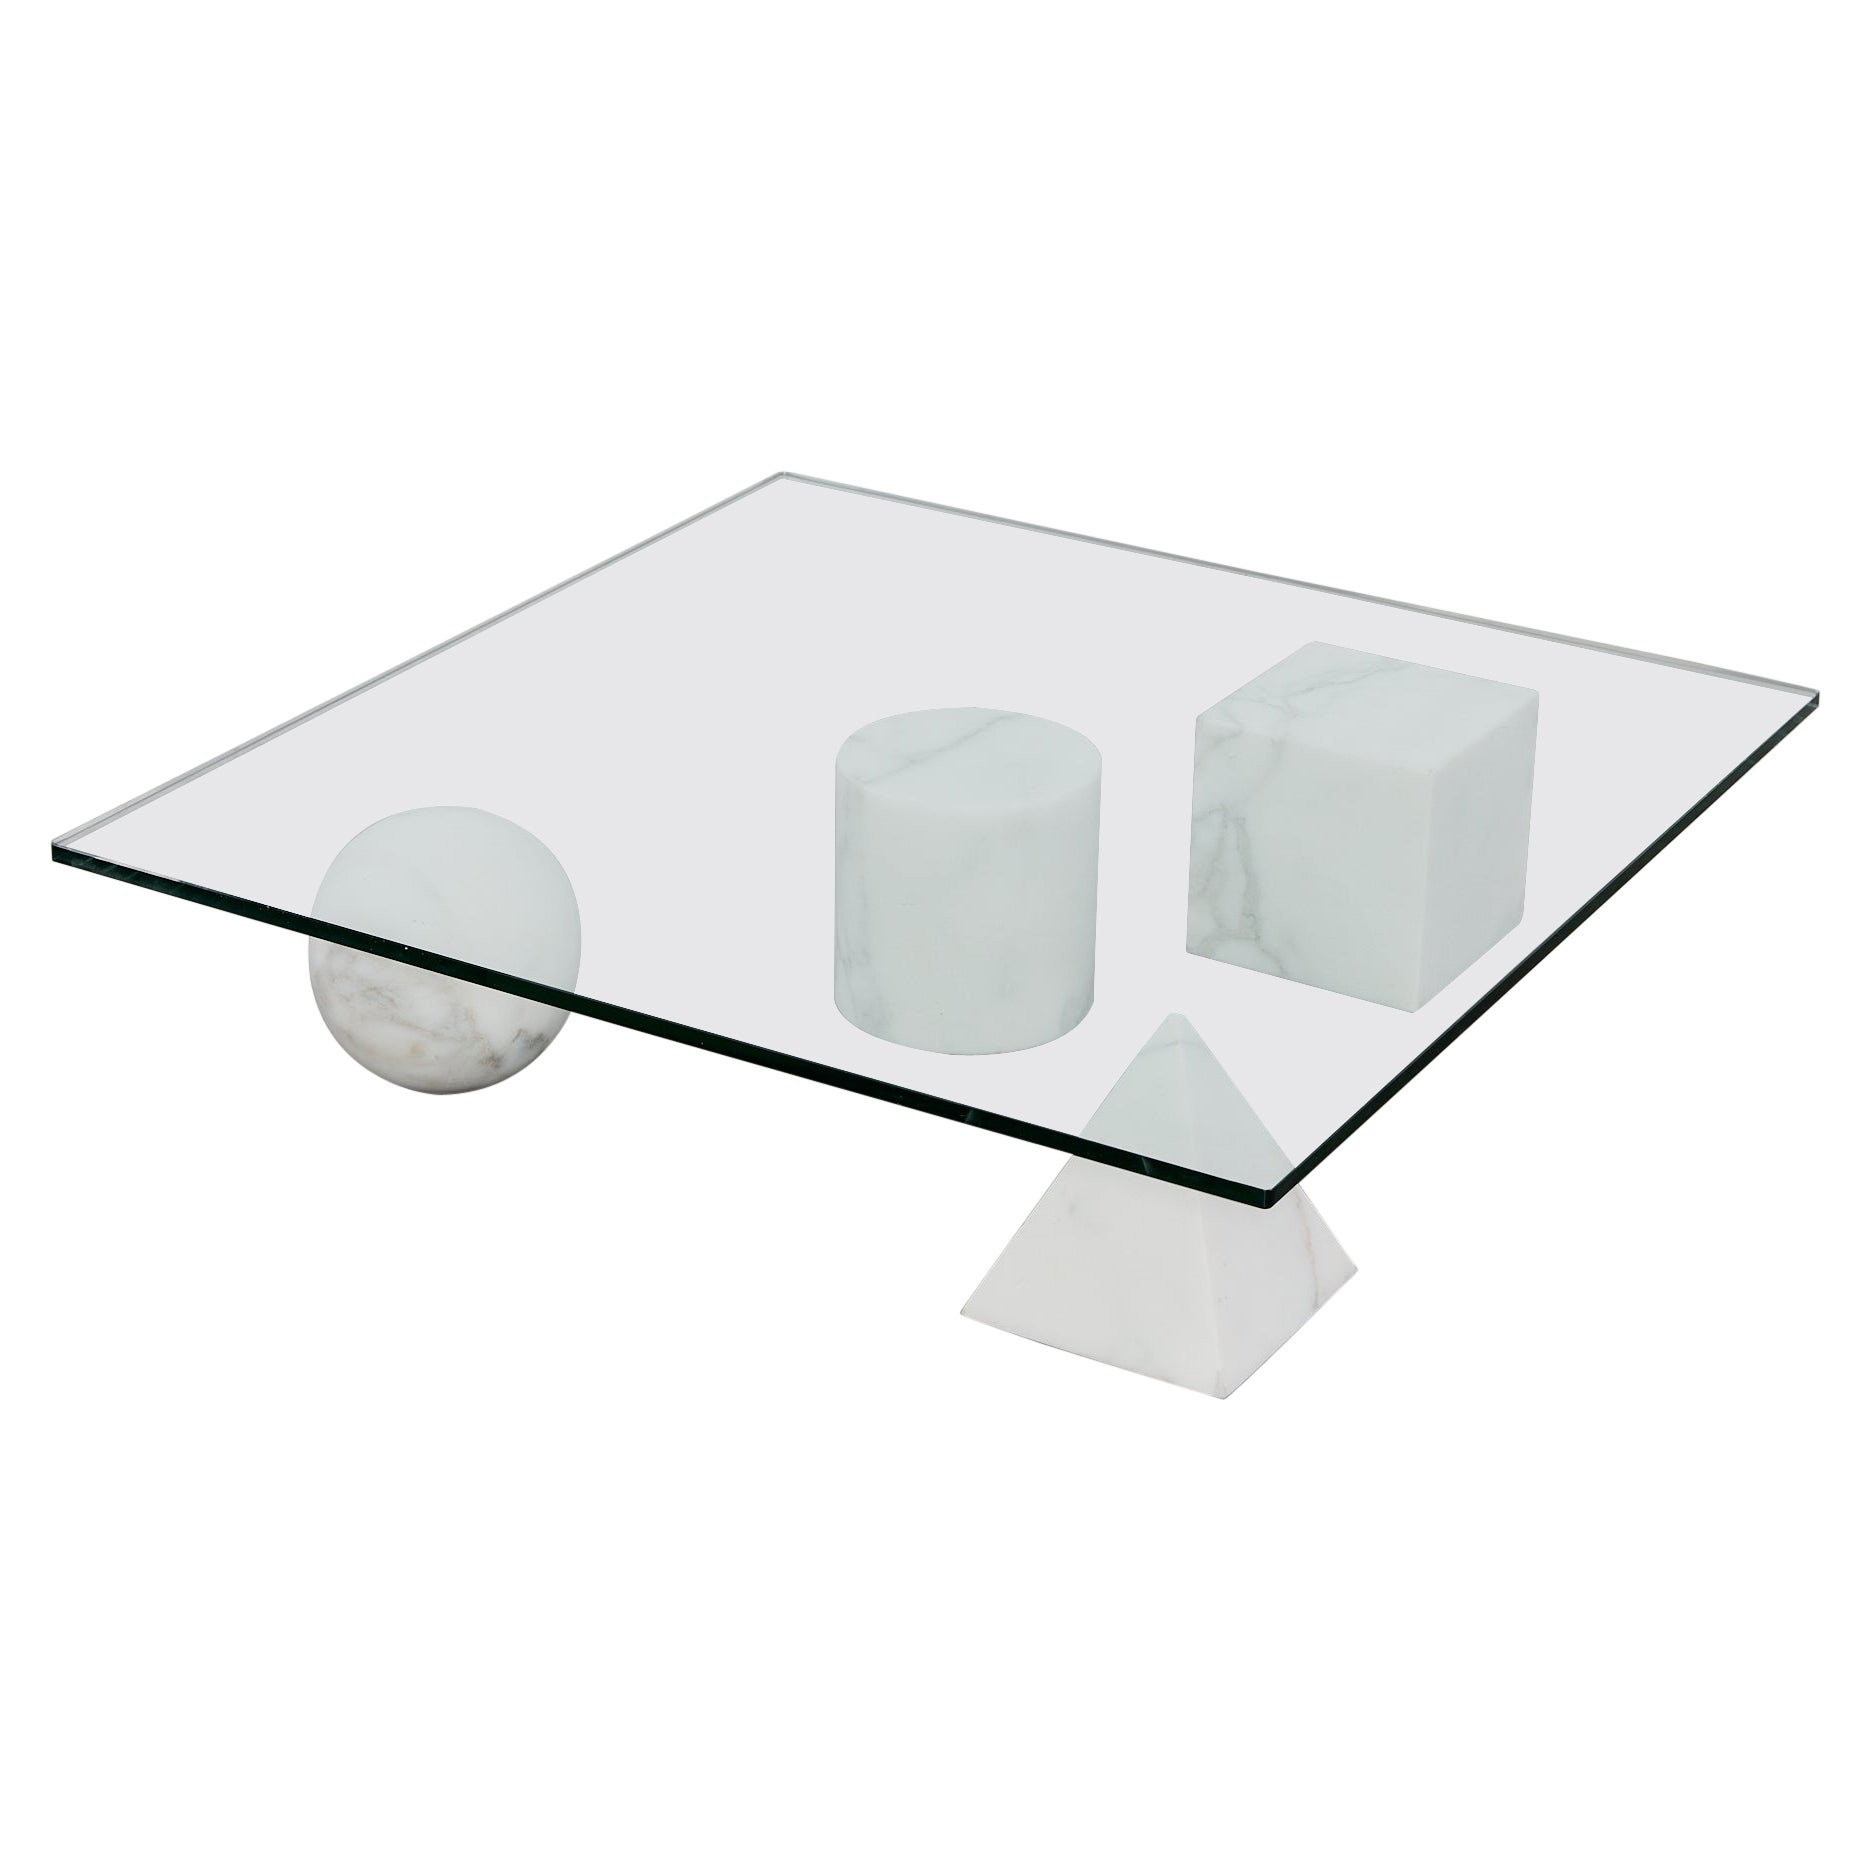 Metafora table by Massimo & Lella Vignelli in Carrara marble